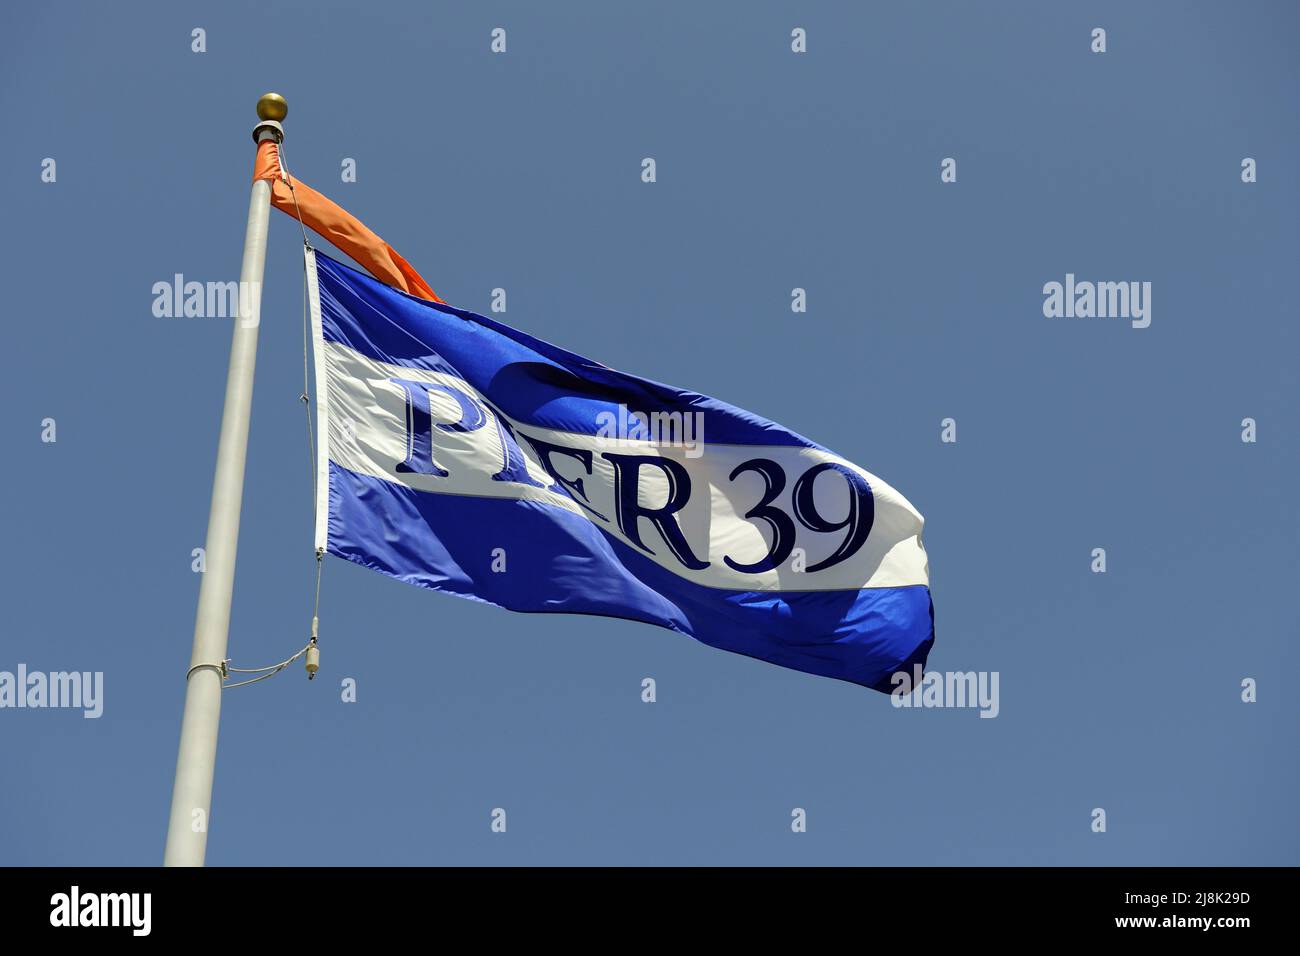 Flag of Pier 39 at Fisherman's Wharf, USA, California, San Francisco Stock Photo